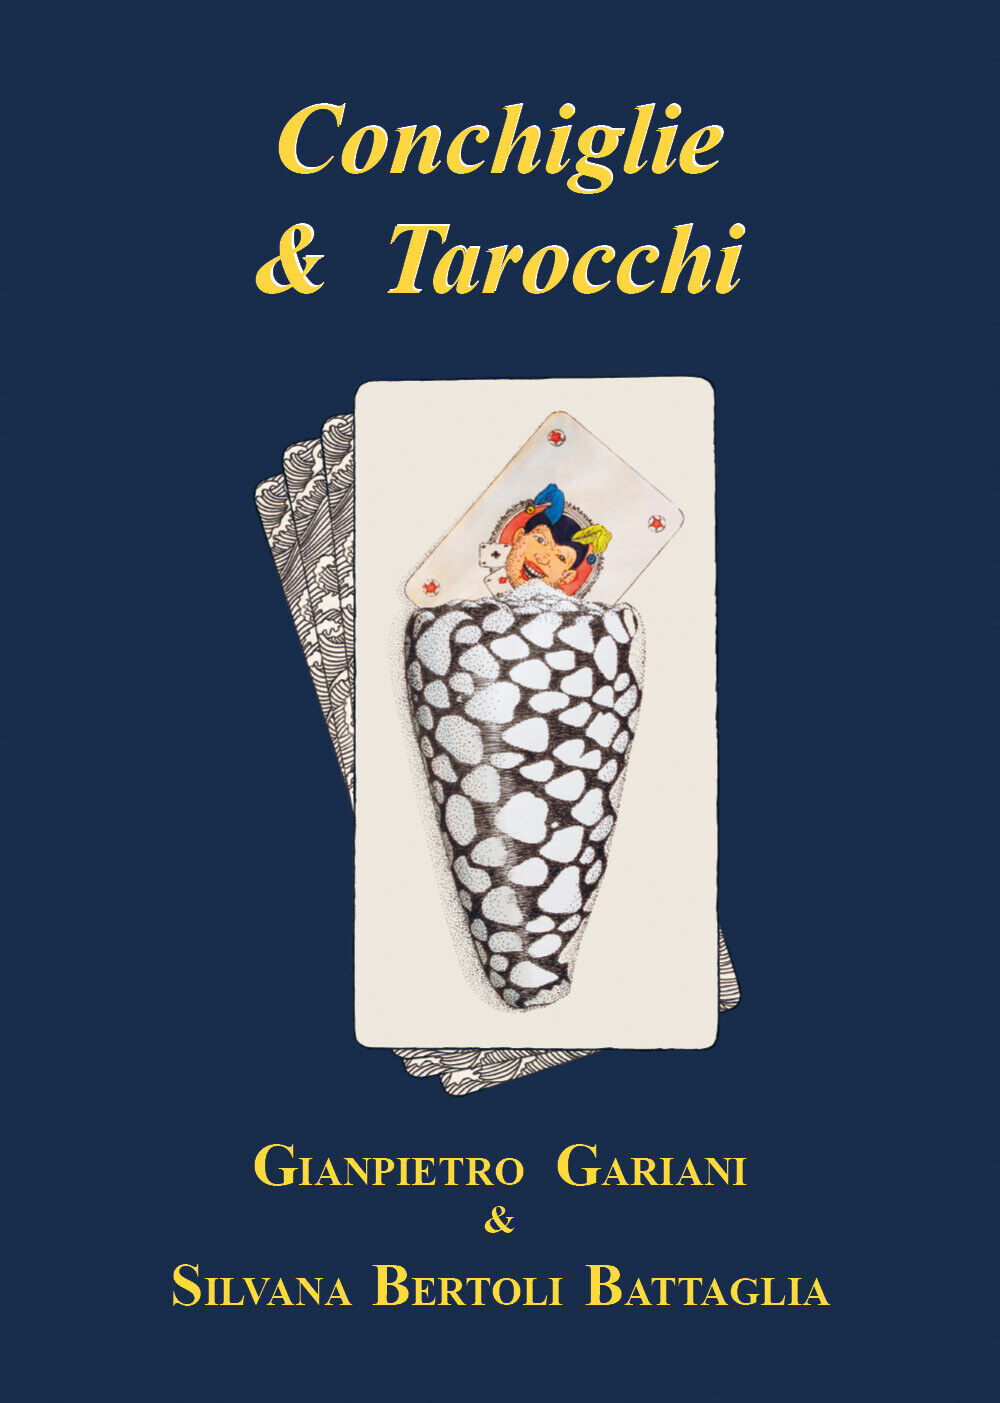 Conchiglie & Tarocchi di Silvana Bertoli,  2021,  Youcanprint